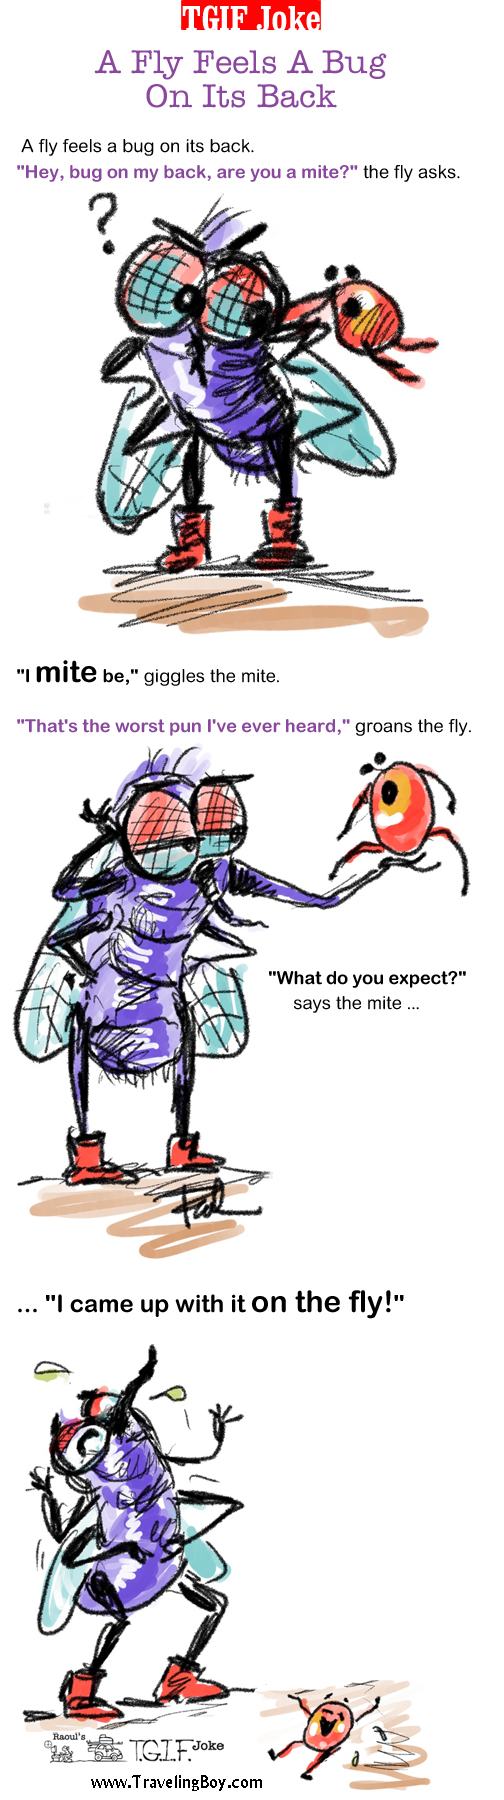 TGIF Joke of the Week: A Fly Feels a Bug on Its Back